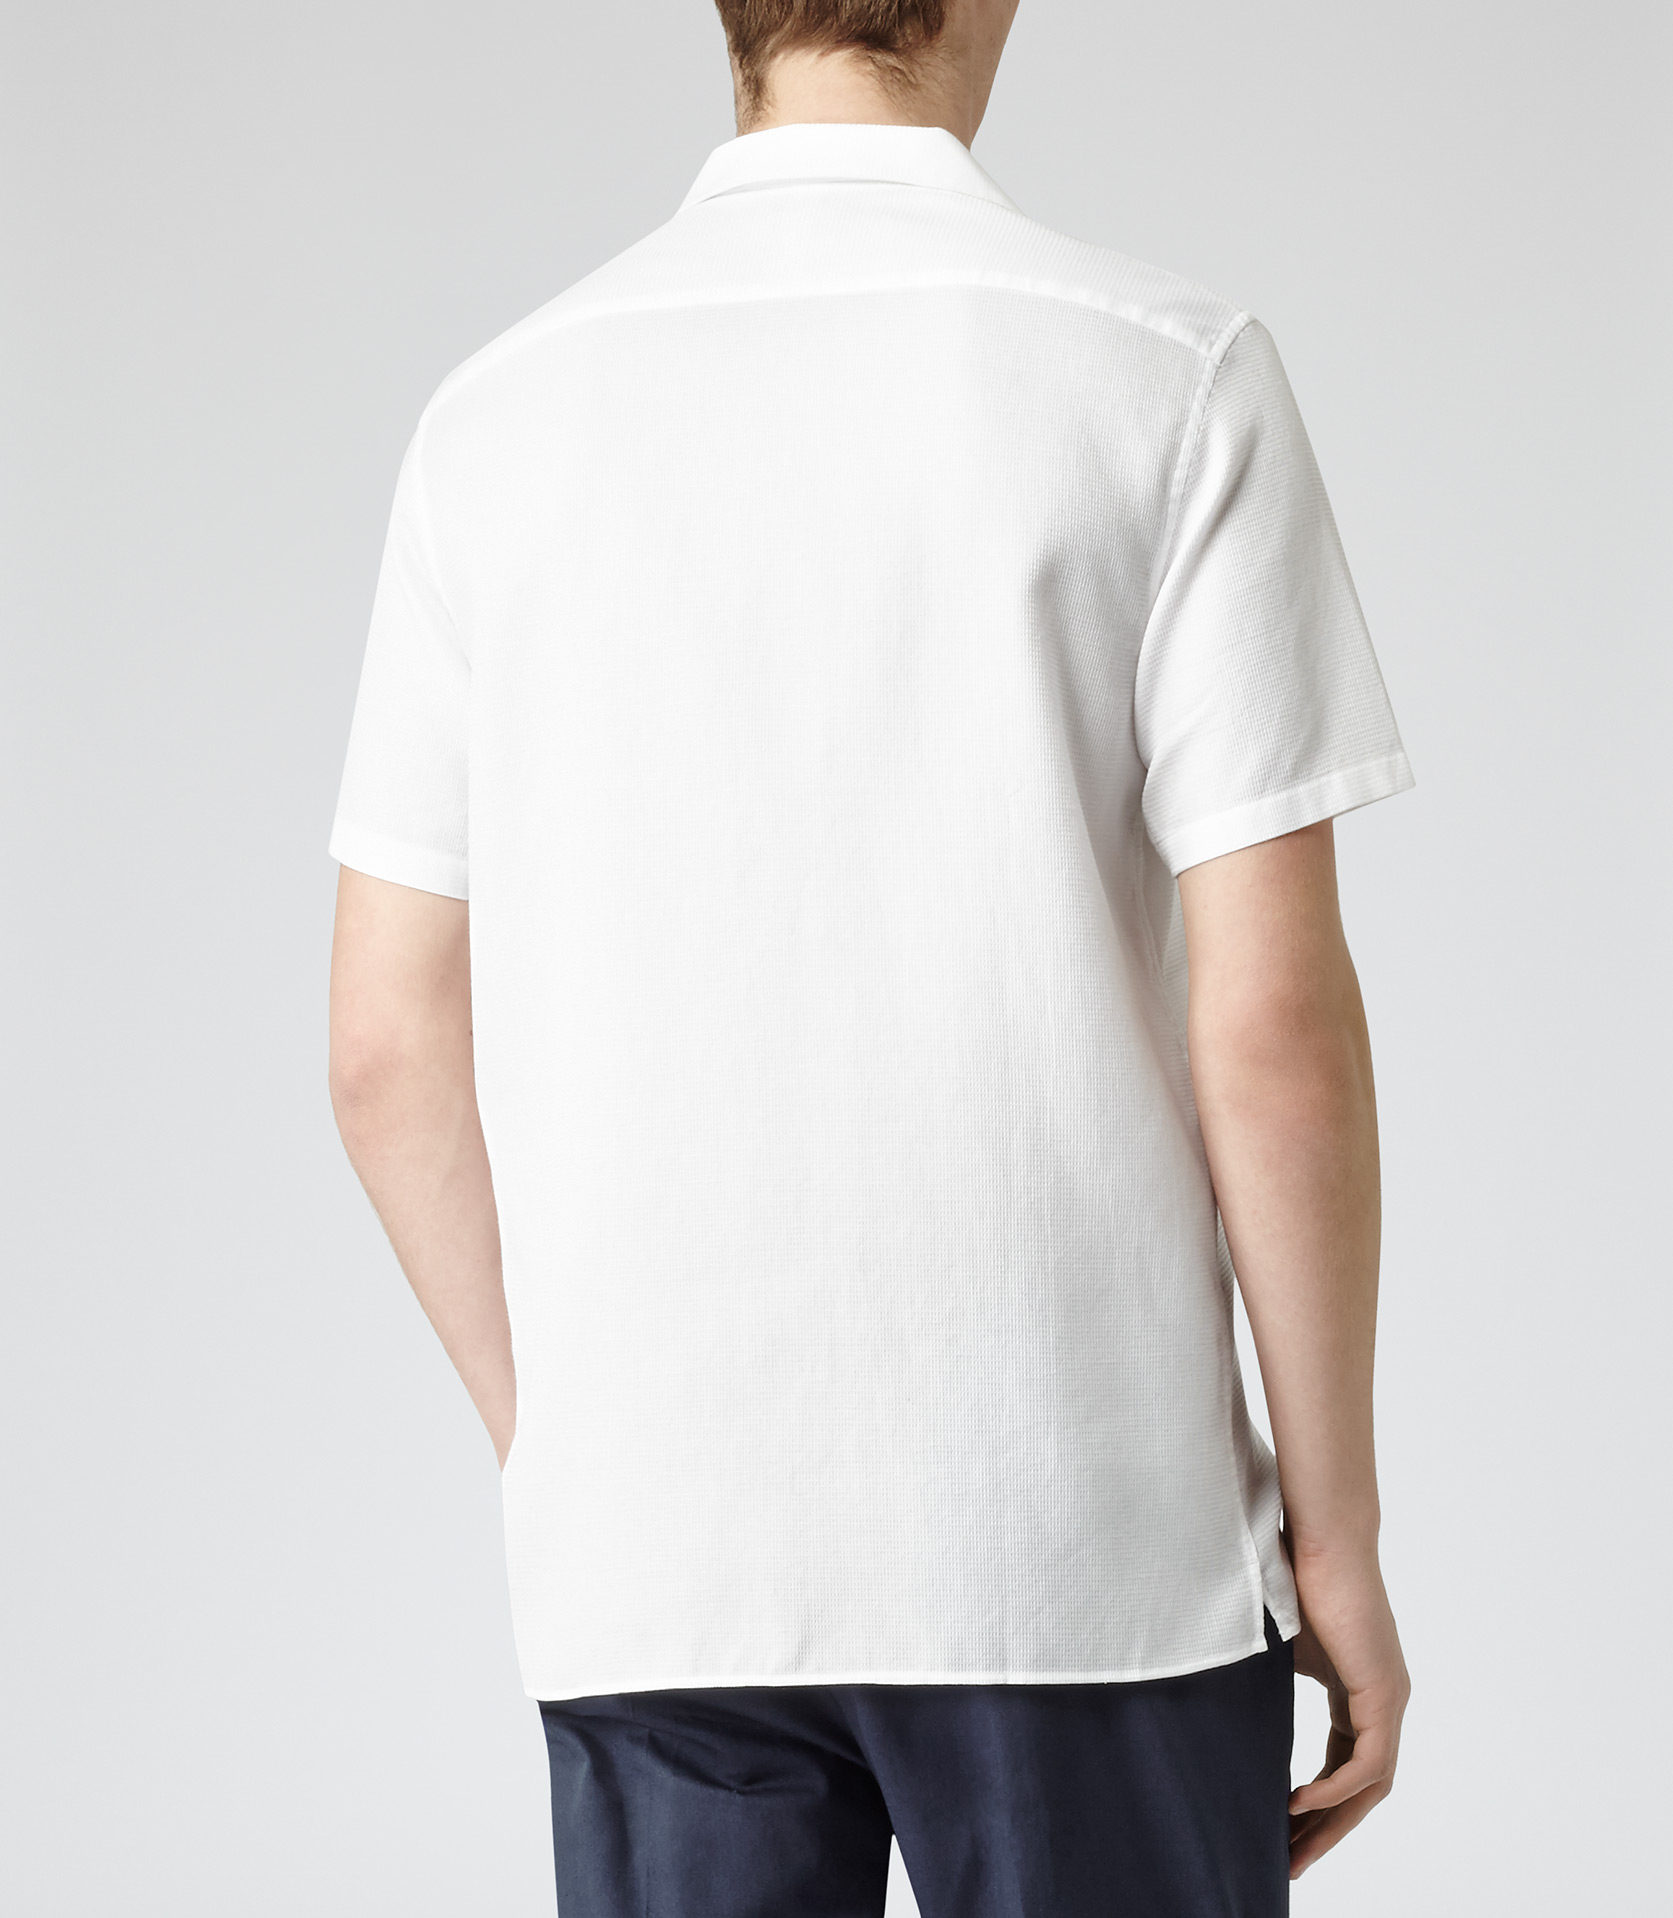 Lyst - Reiss Alder Textured Cuban Collar Shirt in White for Men